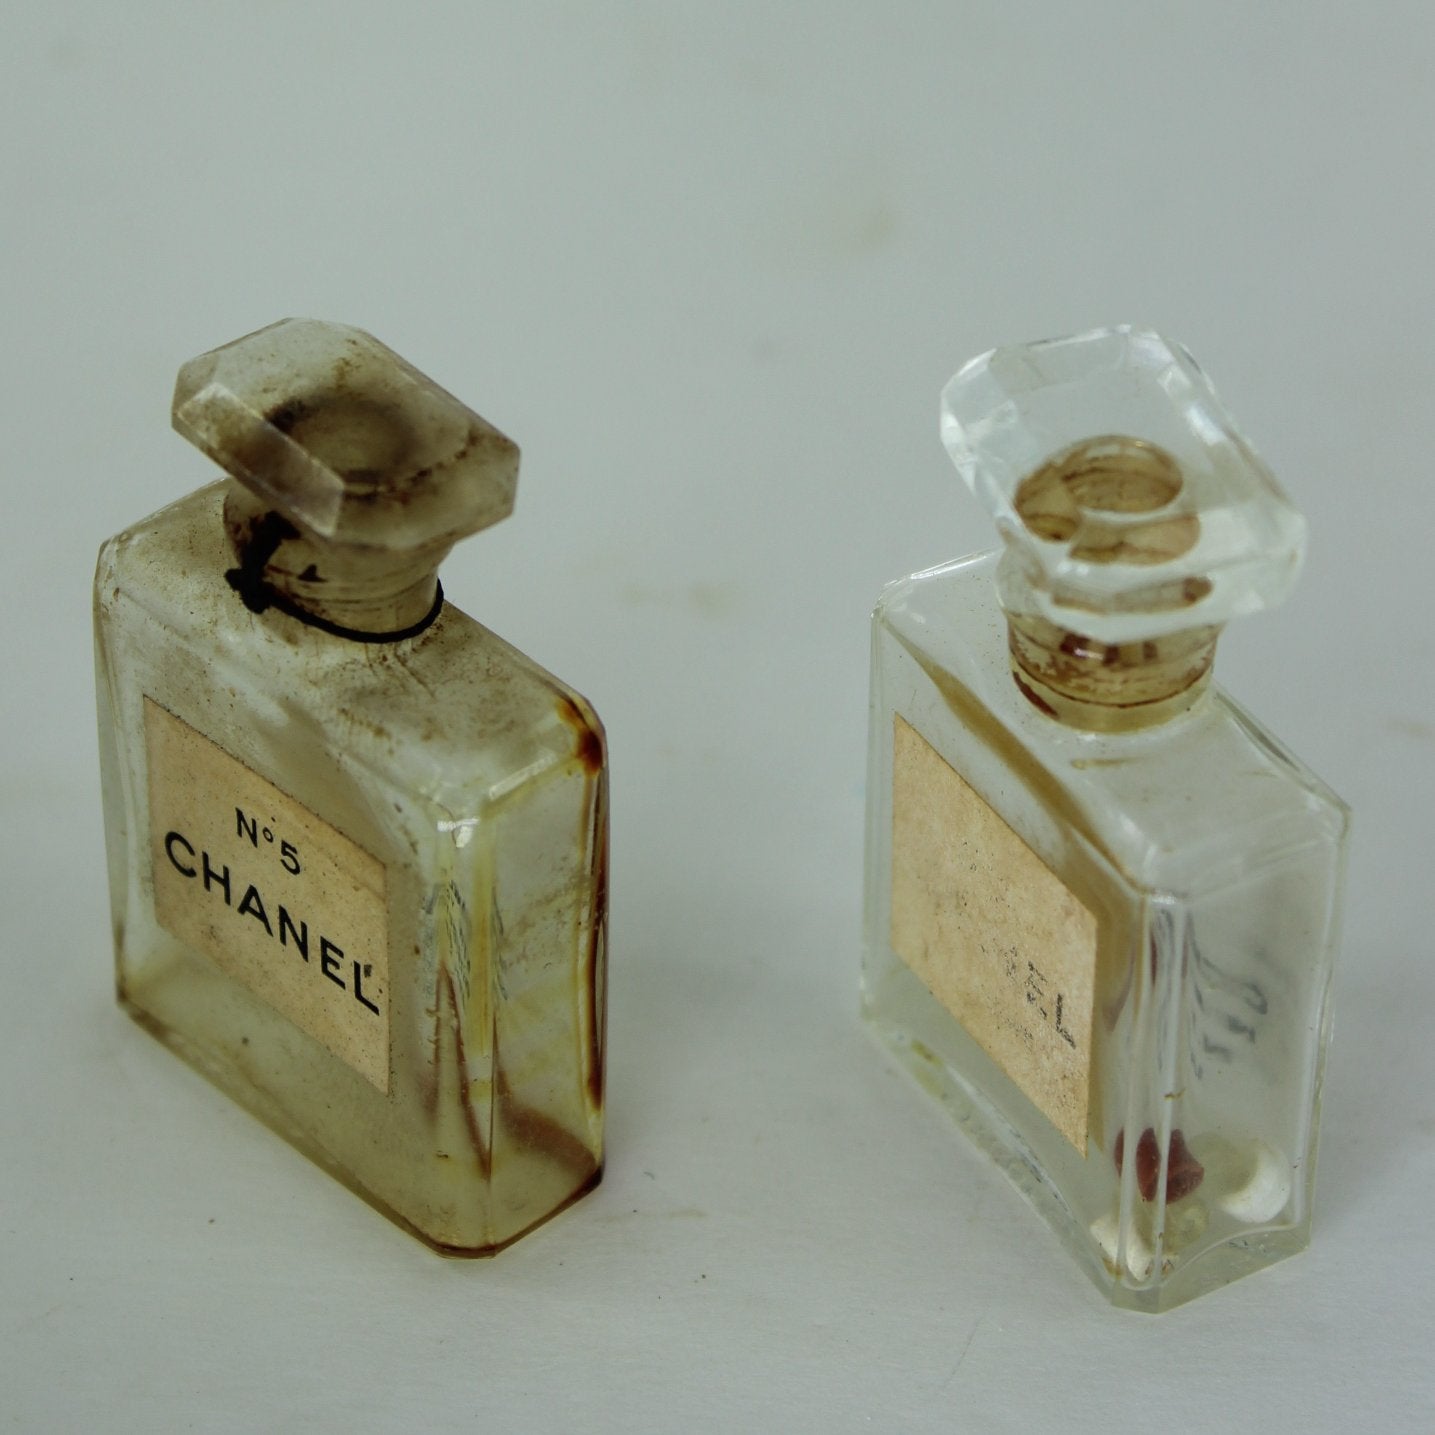 vintage chanel no 5 eau de parfum